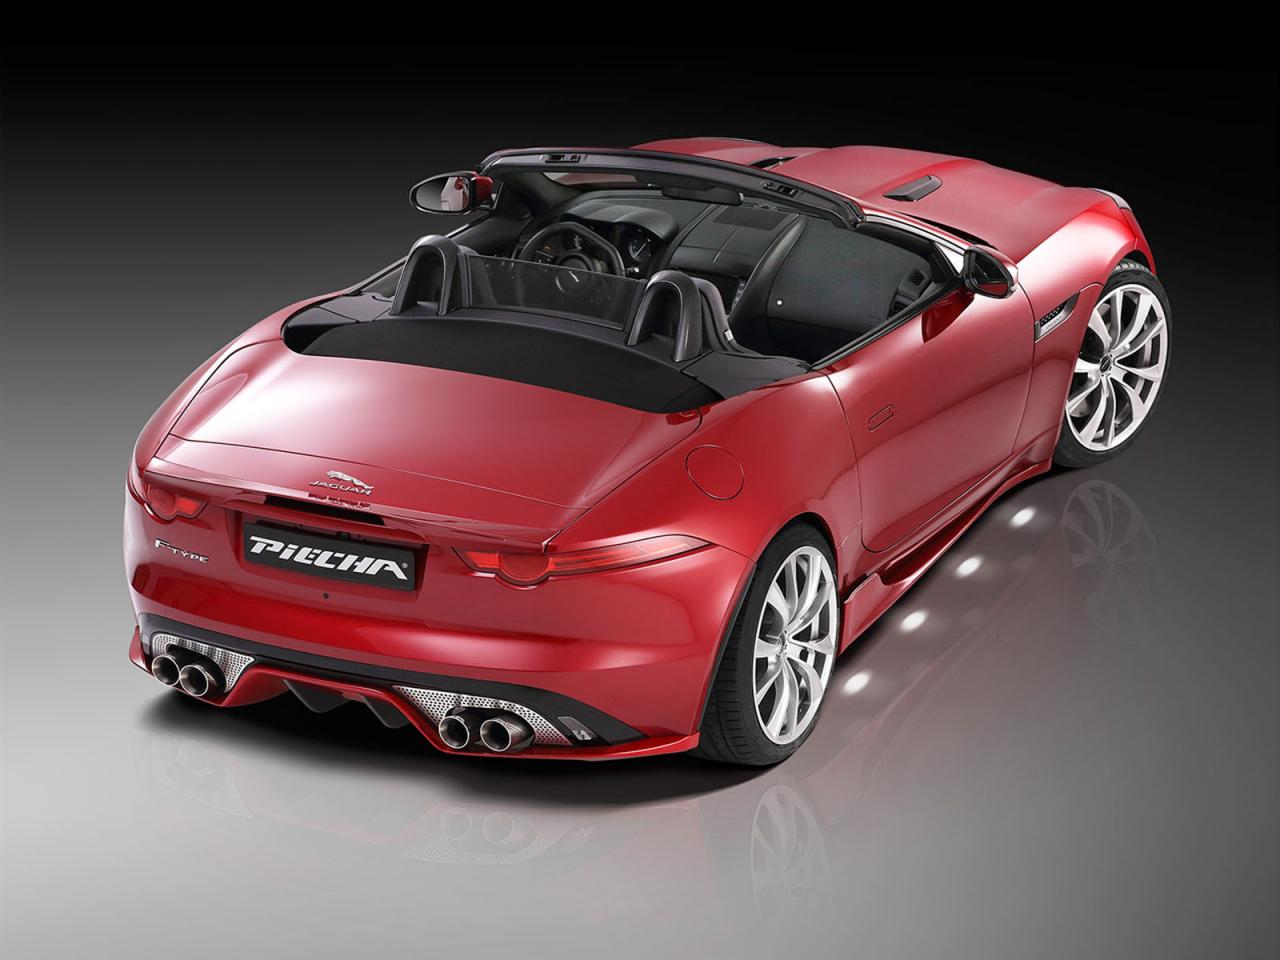 Jaguar F-Type by Piecha Design